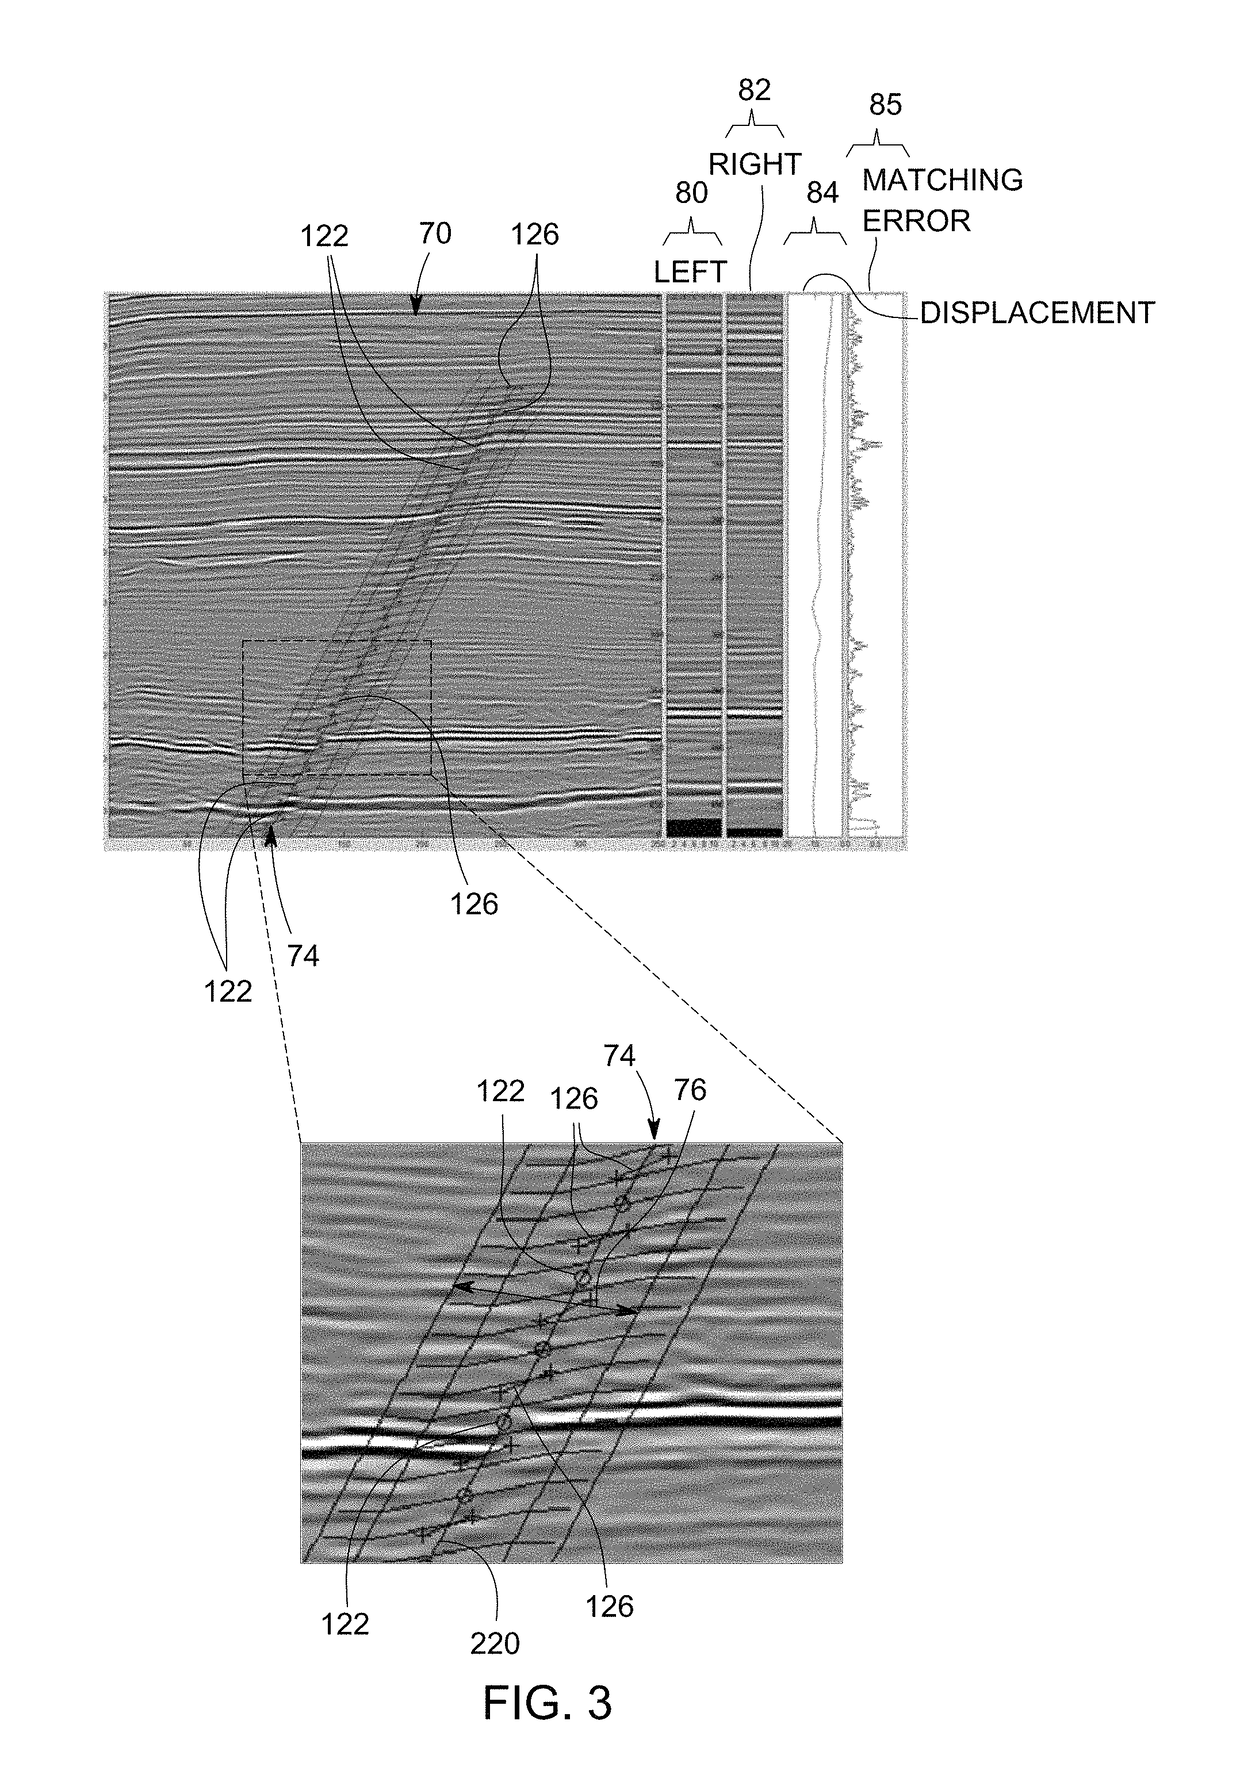 Computer-assisted fault interpretation of seismic data